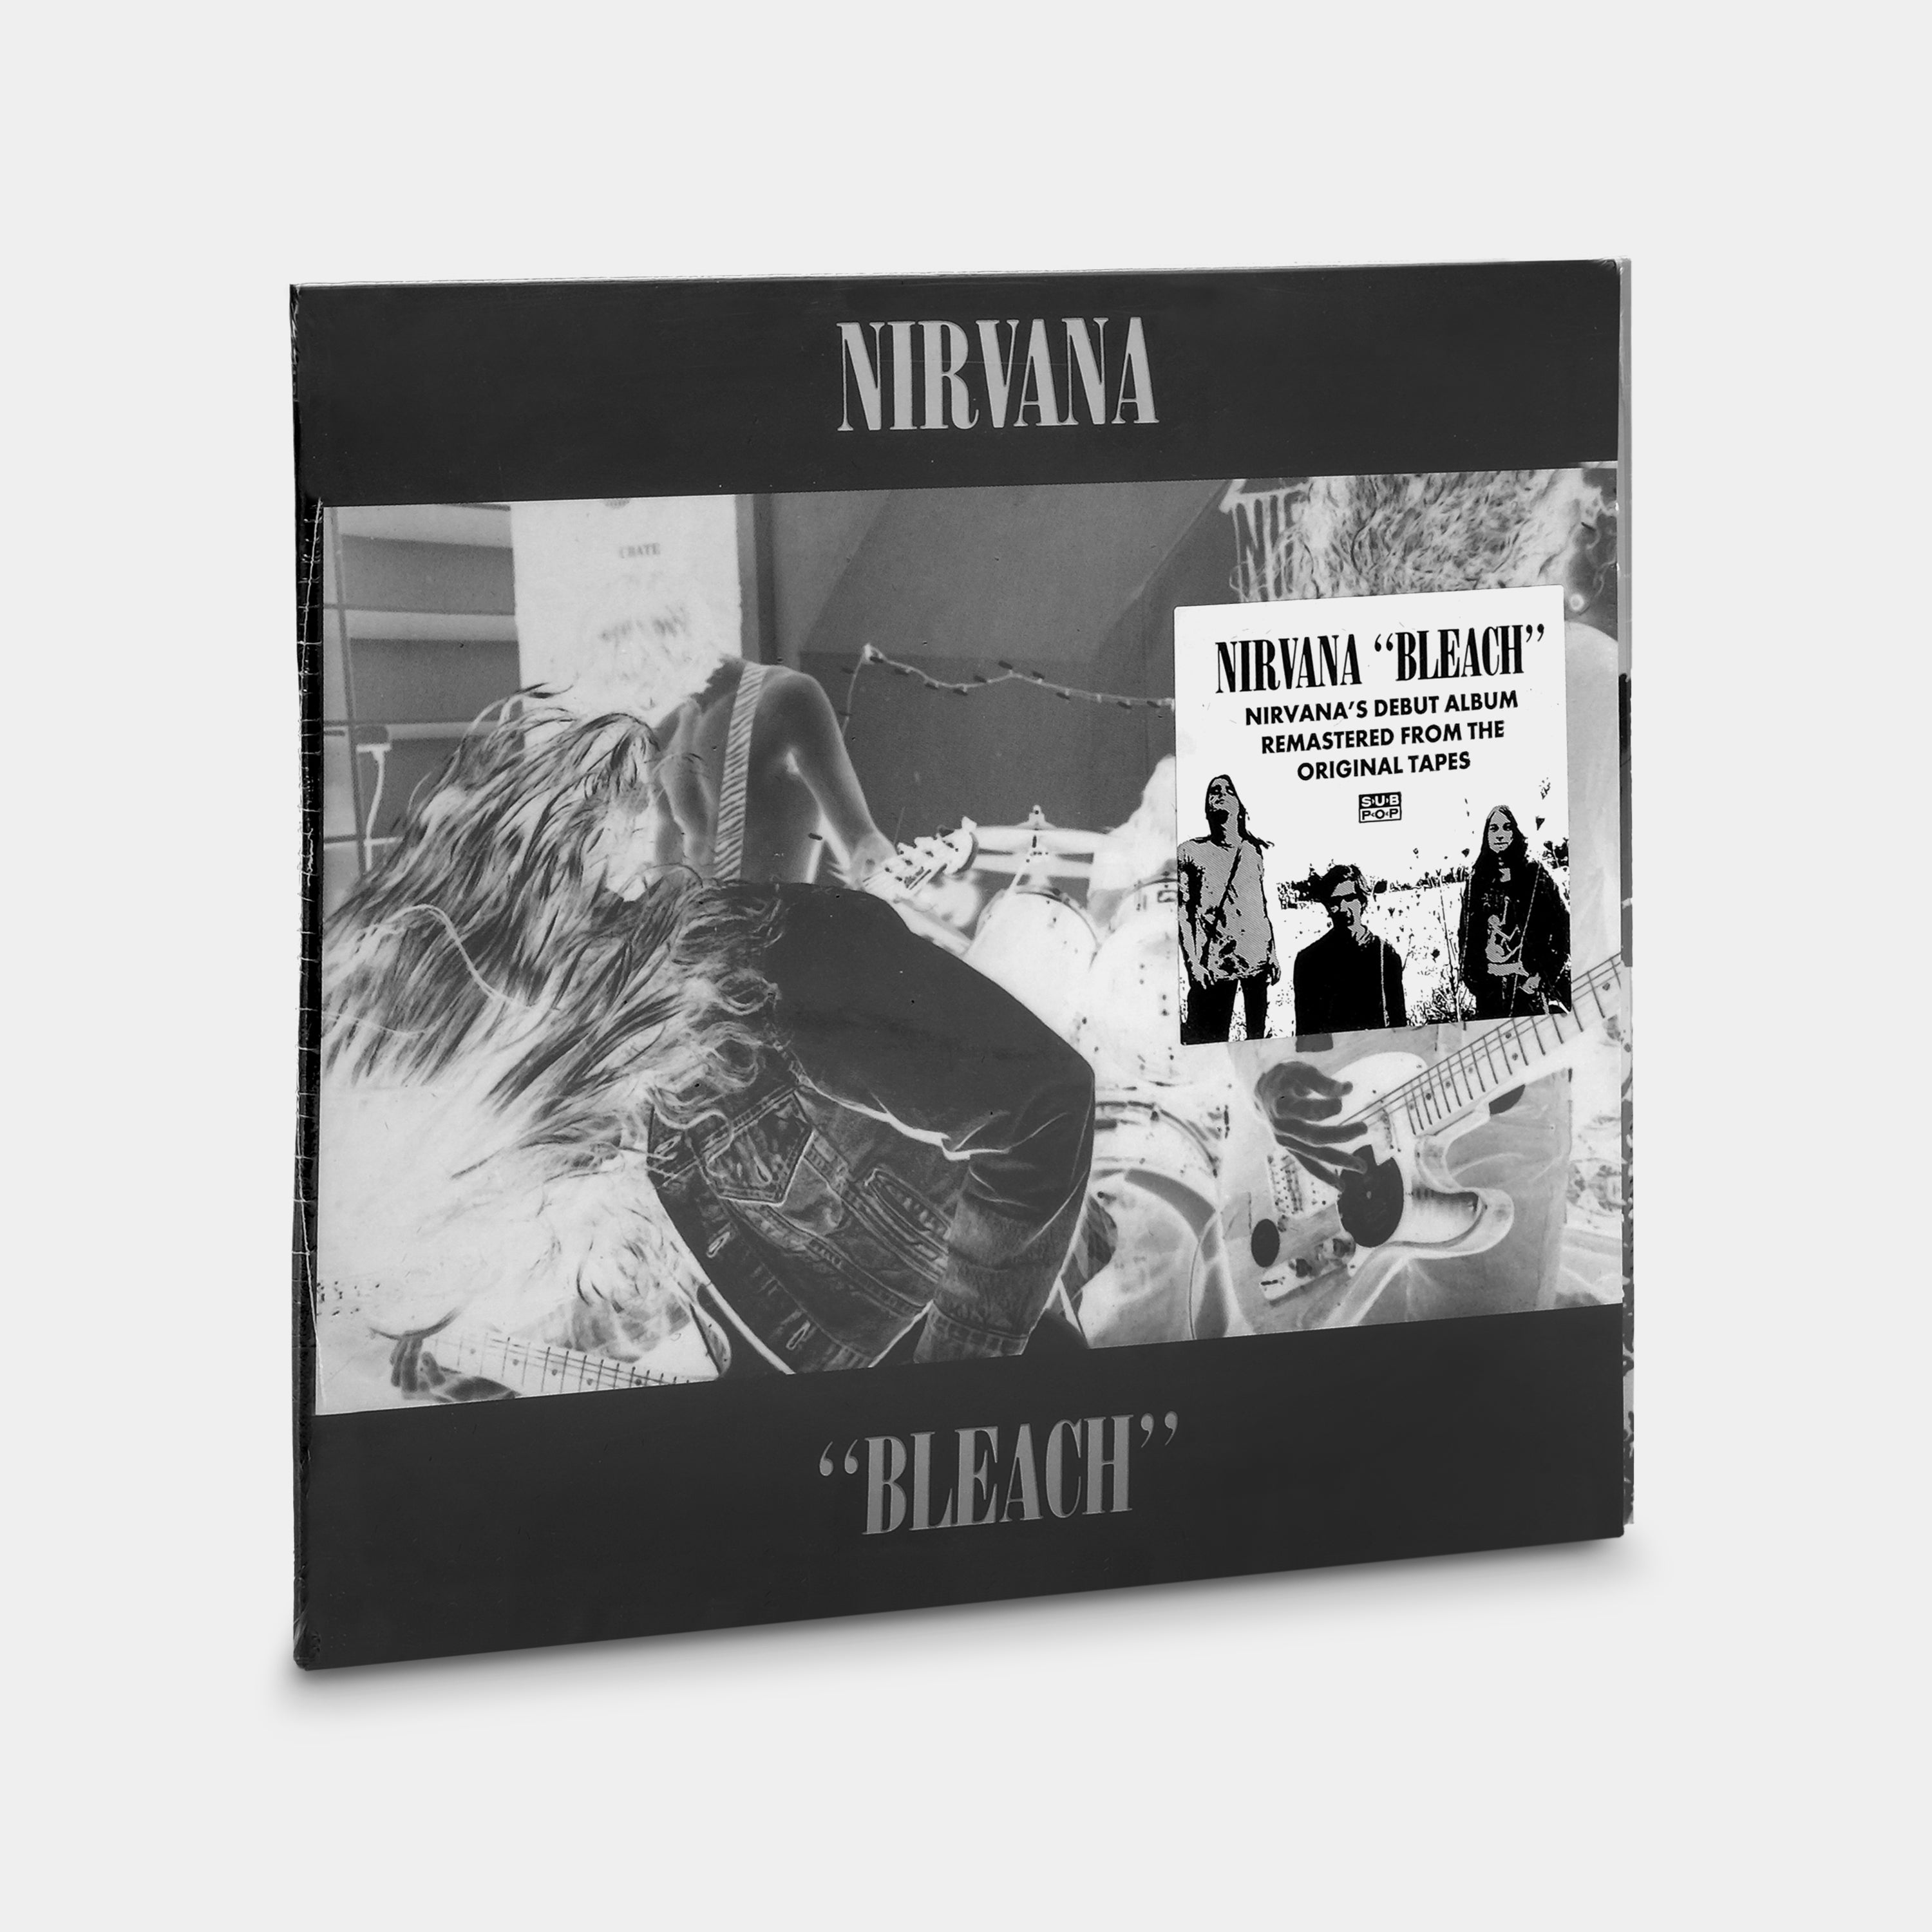 Nirvana - Bleach CD